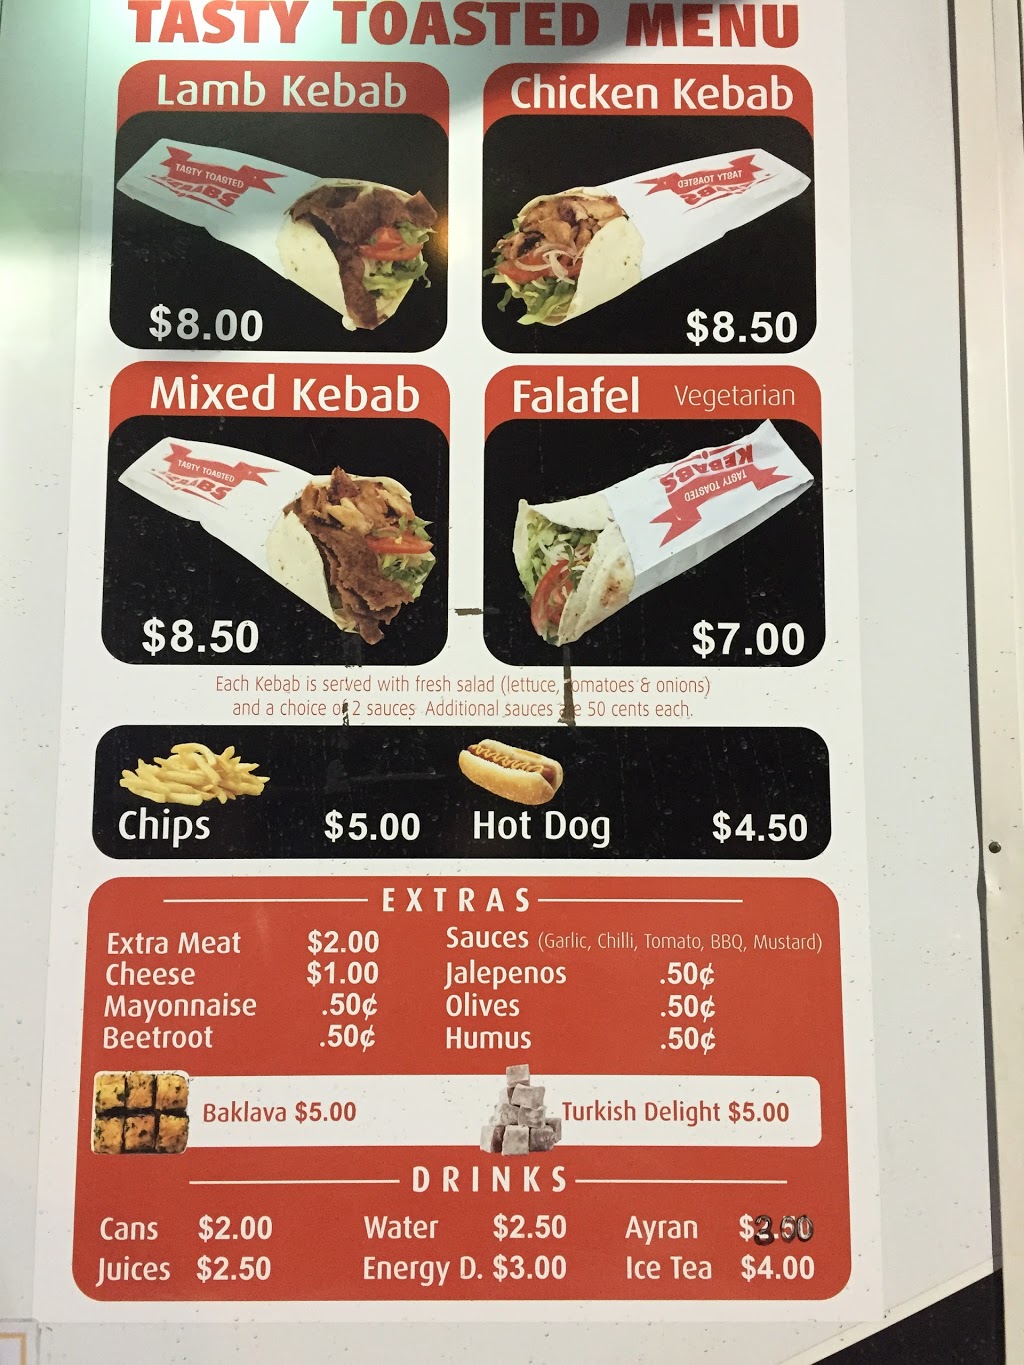 Tasty Toasted Kebabs | restaurant | 226/234 Western Hwy, Braybrook VIC 3019, Australia